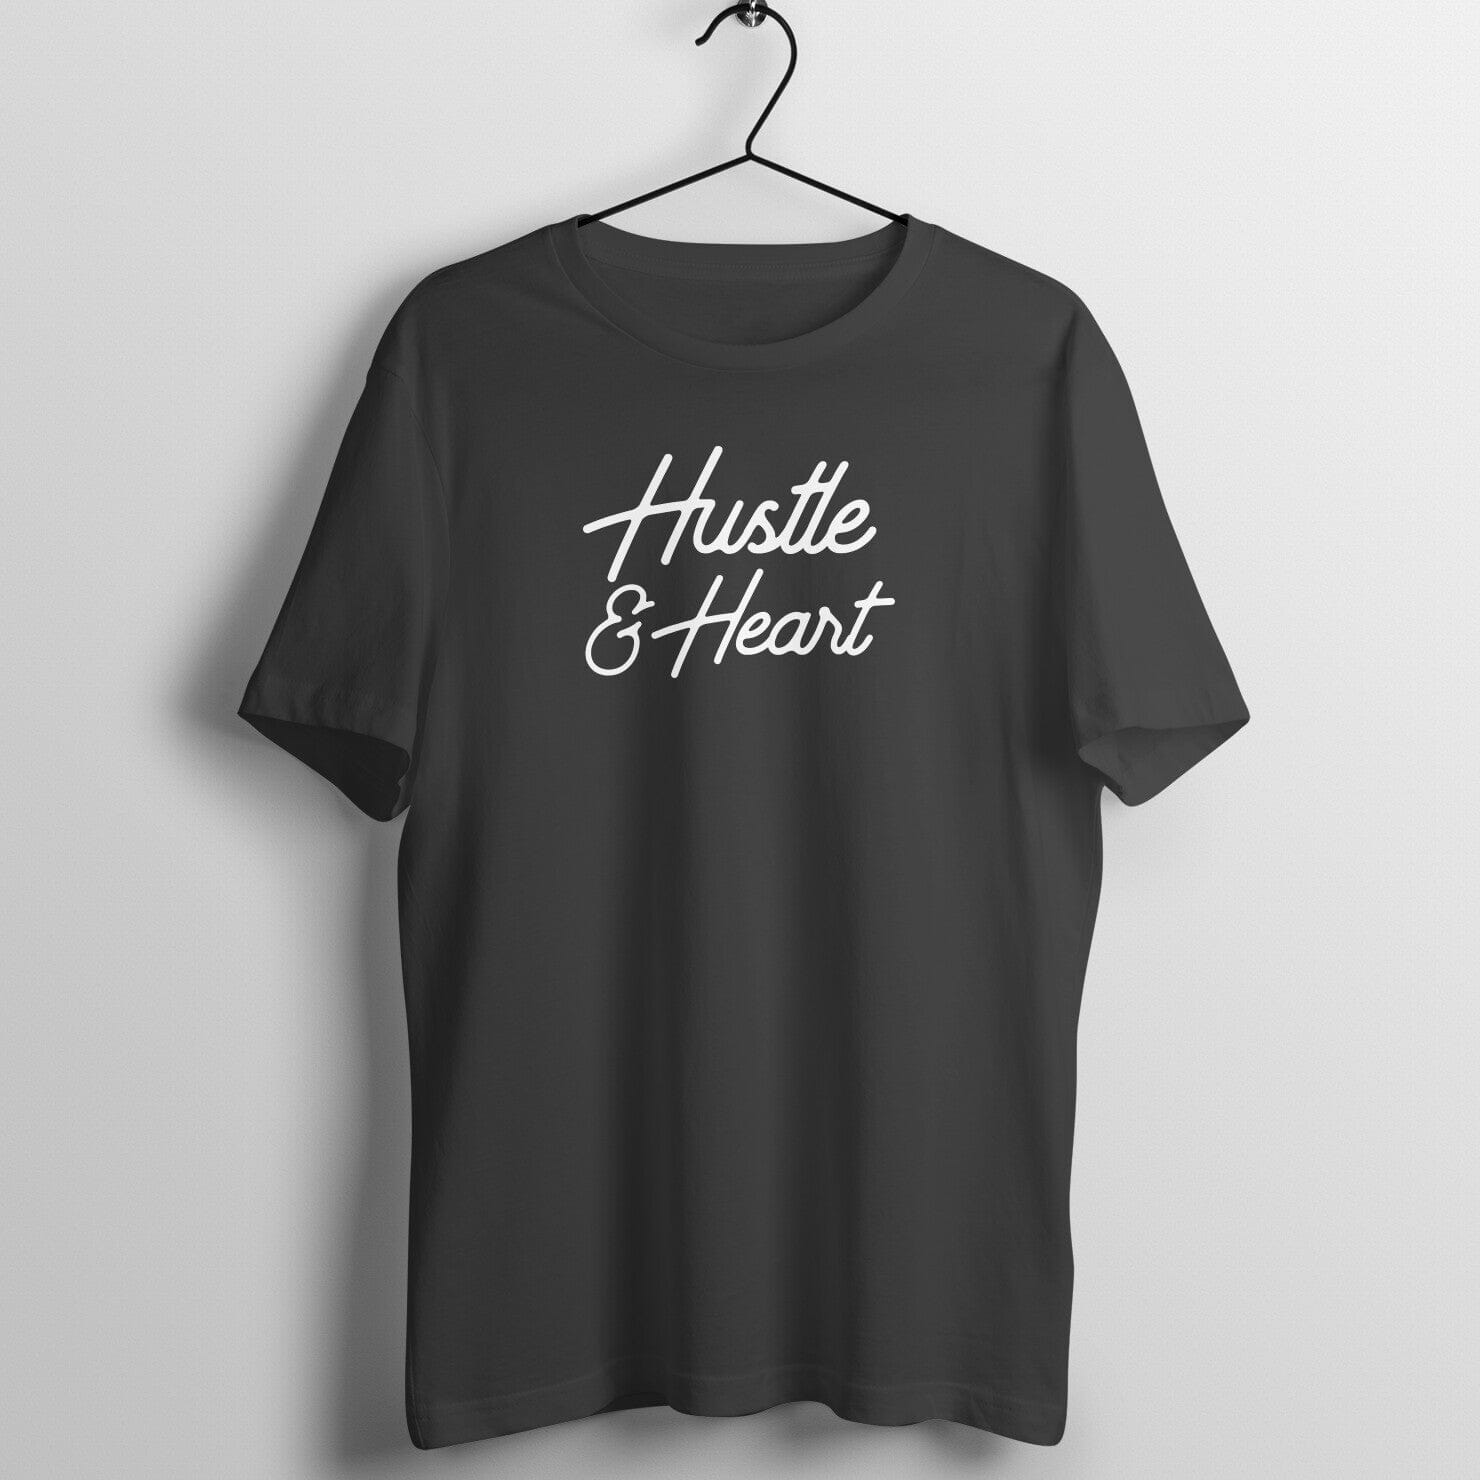 Hustle & Heart Exclusive Black T Shirt for Men and Women Printrove Black S 